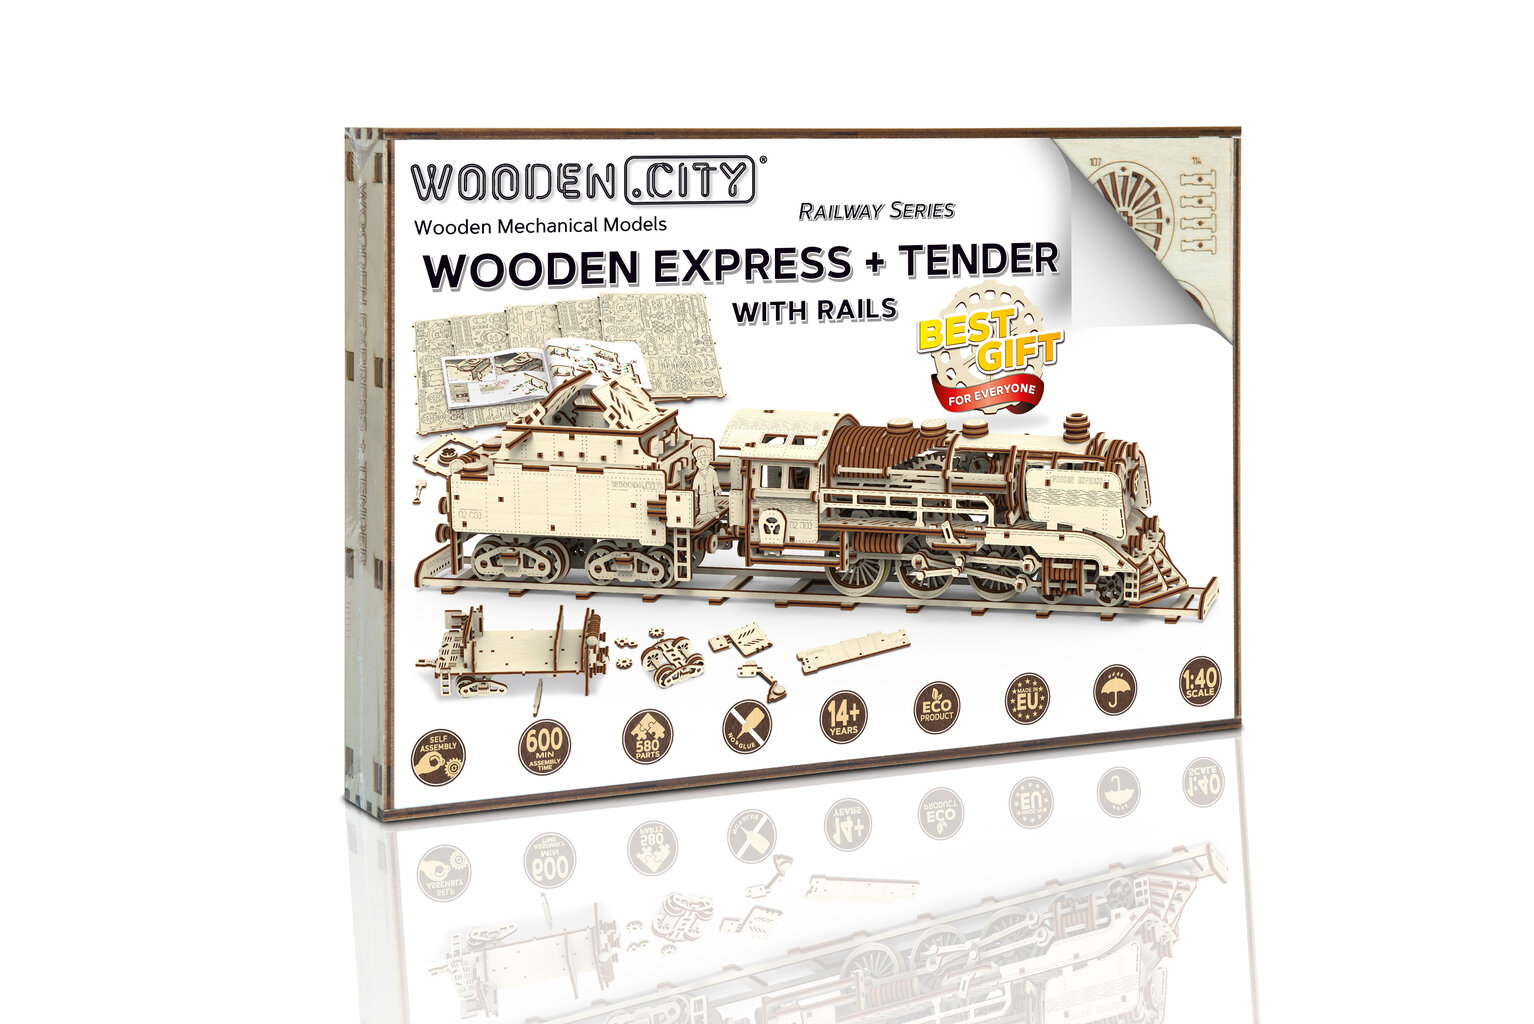 Medinis 3D konstruktorius - Wooden city Traukinys, 717 vnt kaina ir informacija | Konstruktoriai ir kaladėlės | pigu.lt